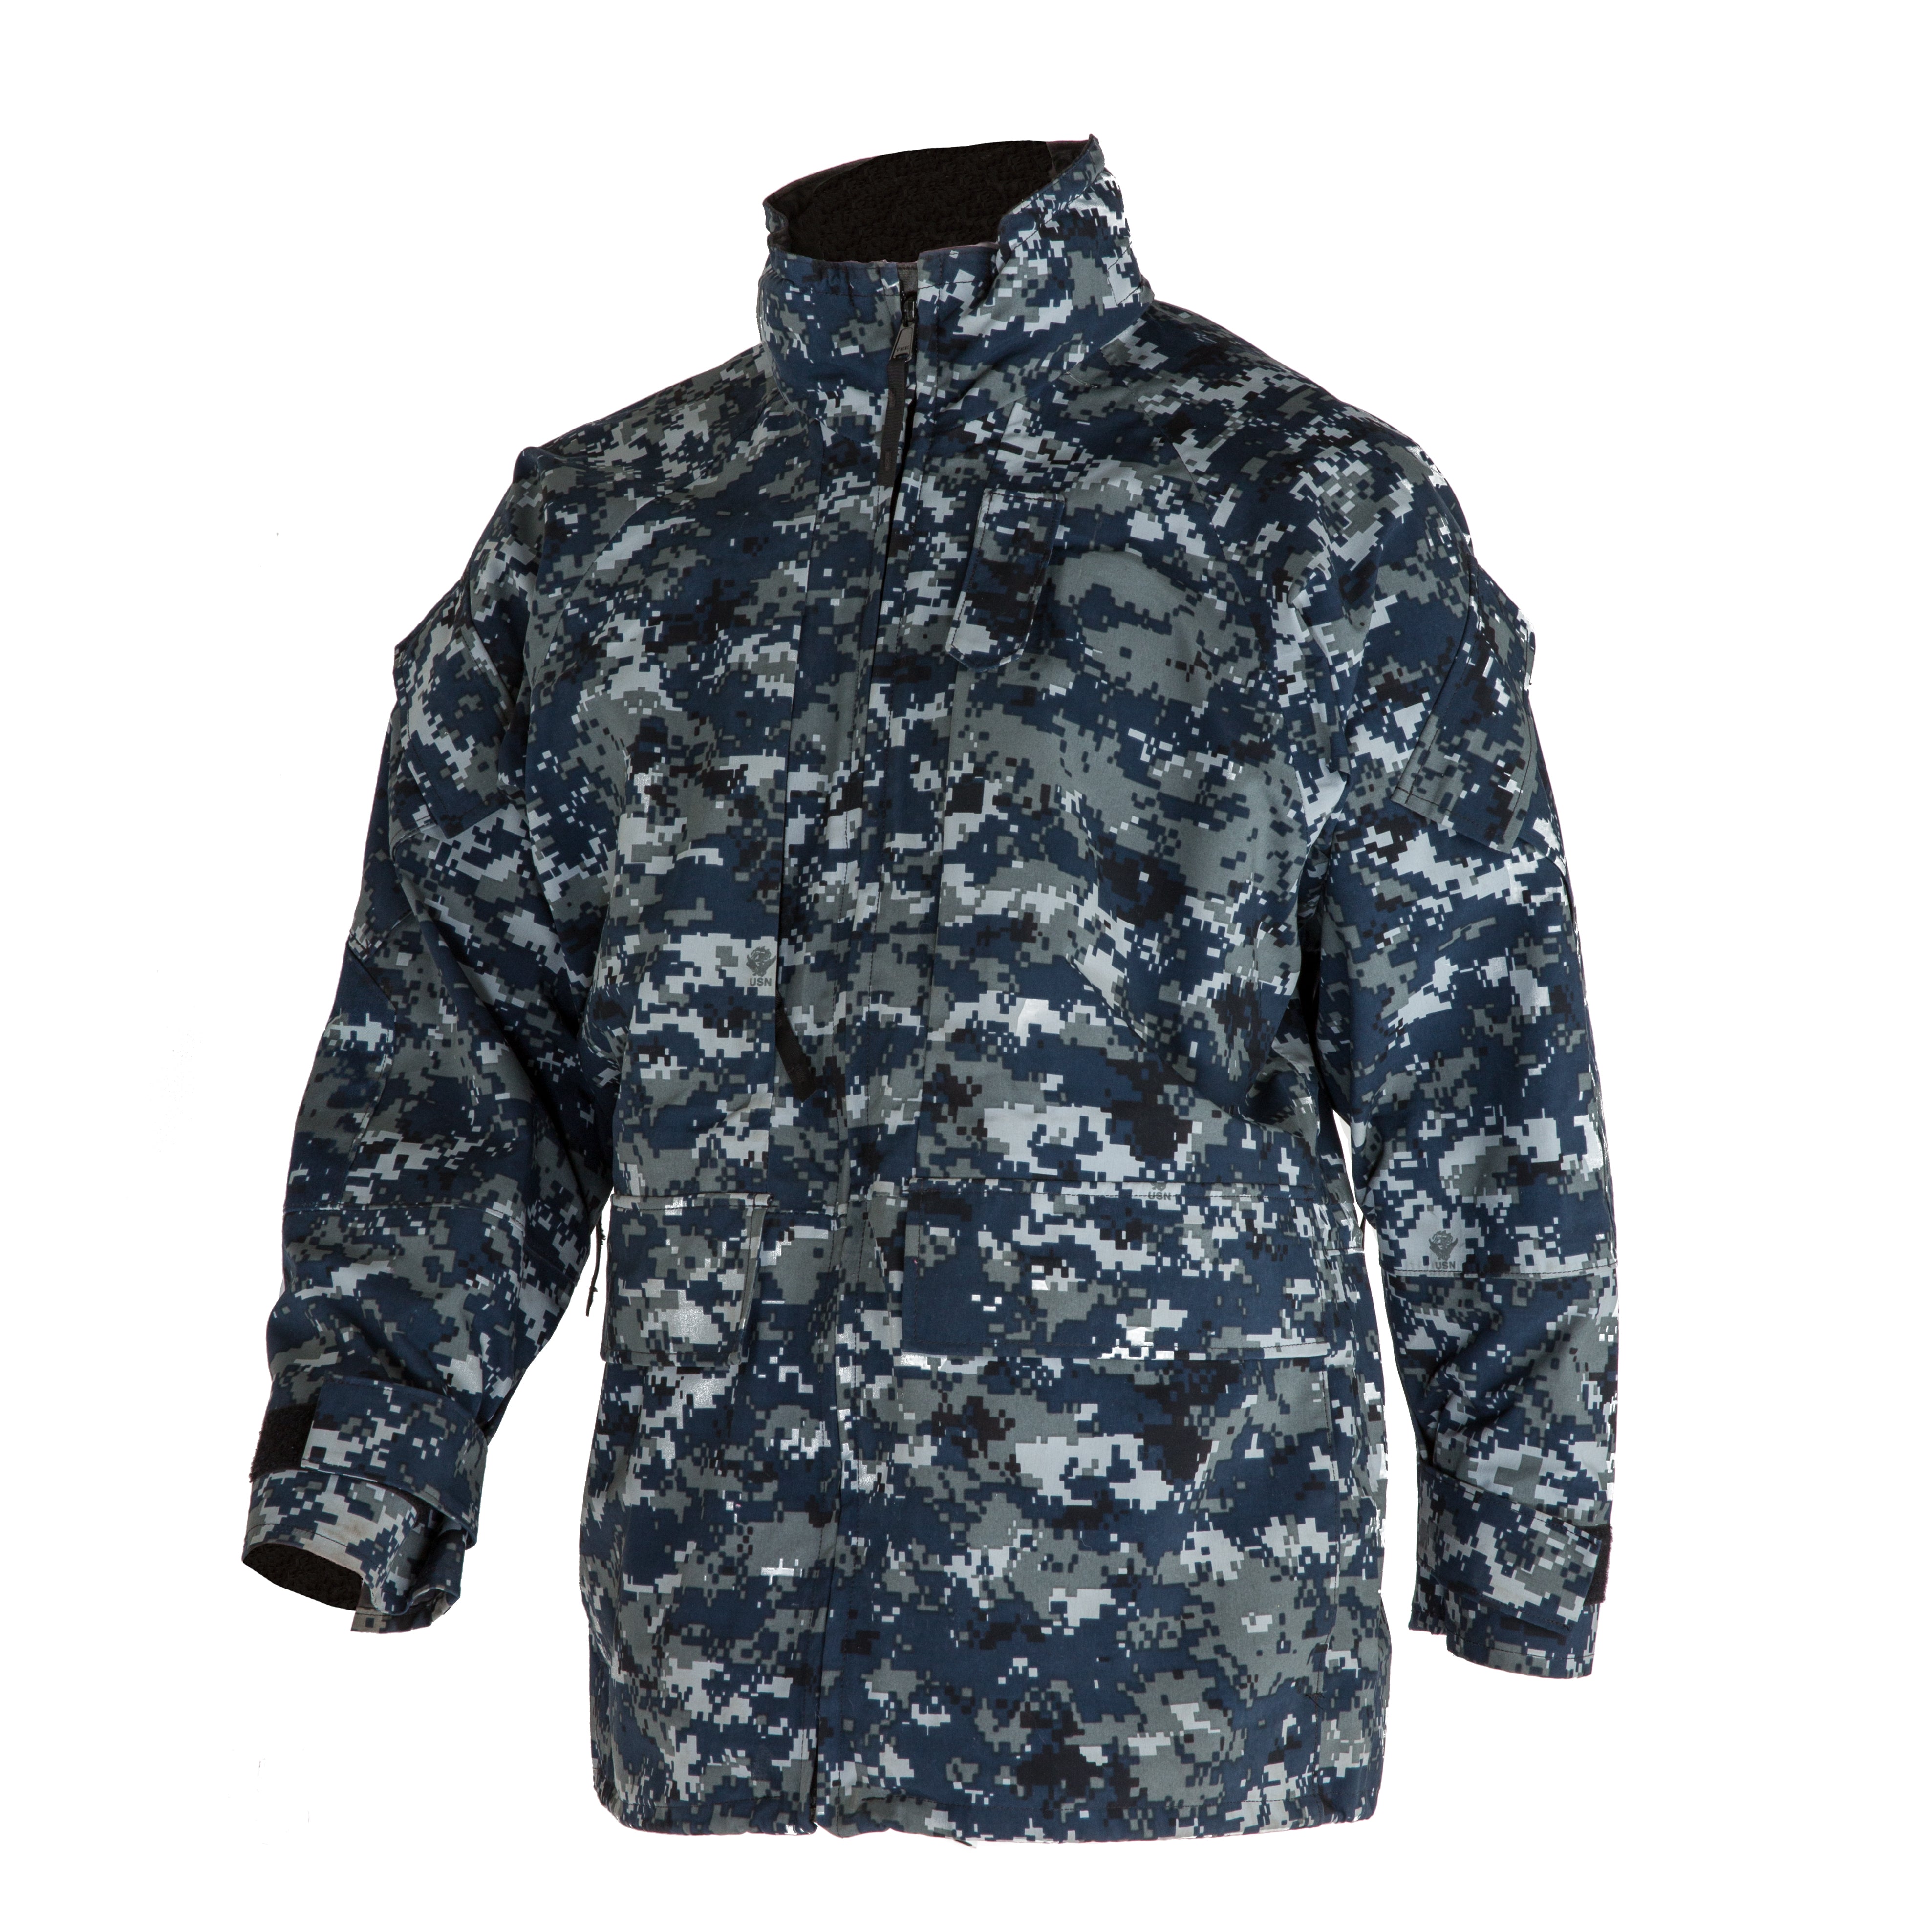 Navy Camo Utility Jacket